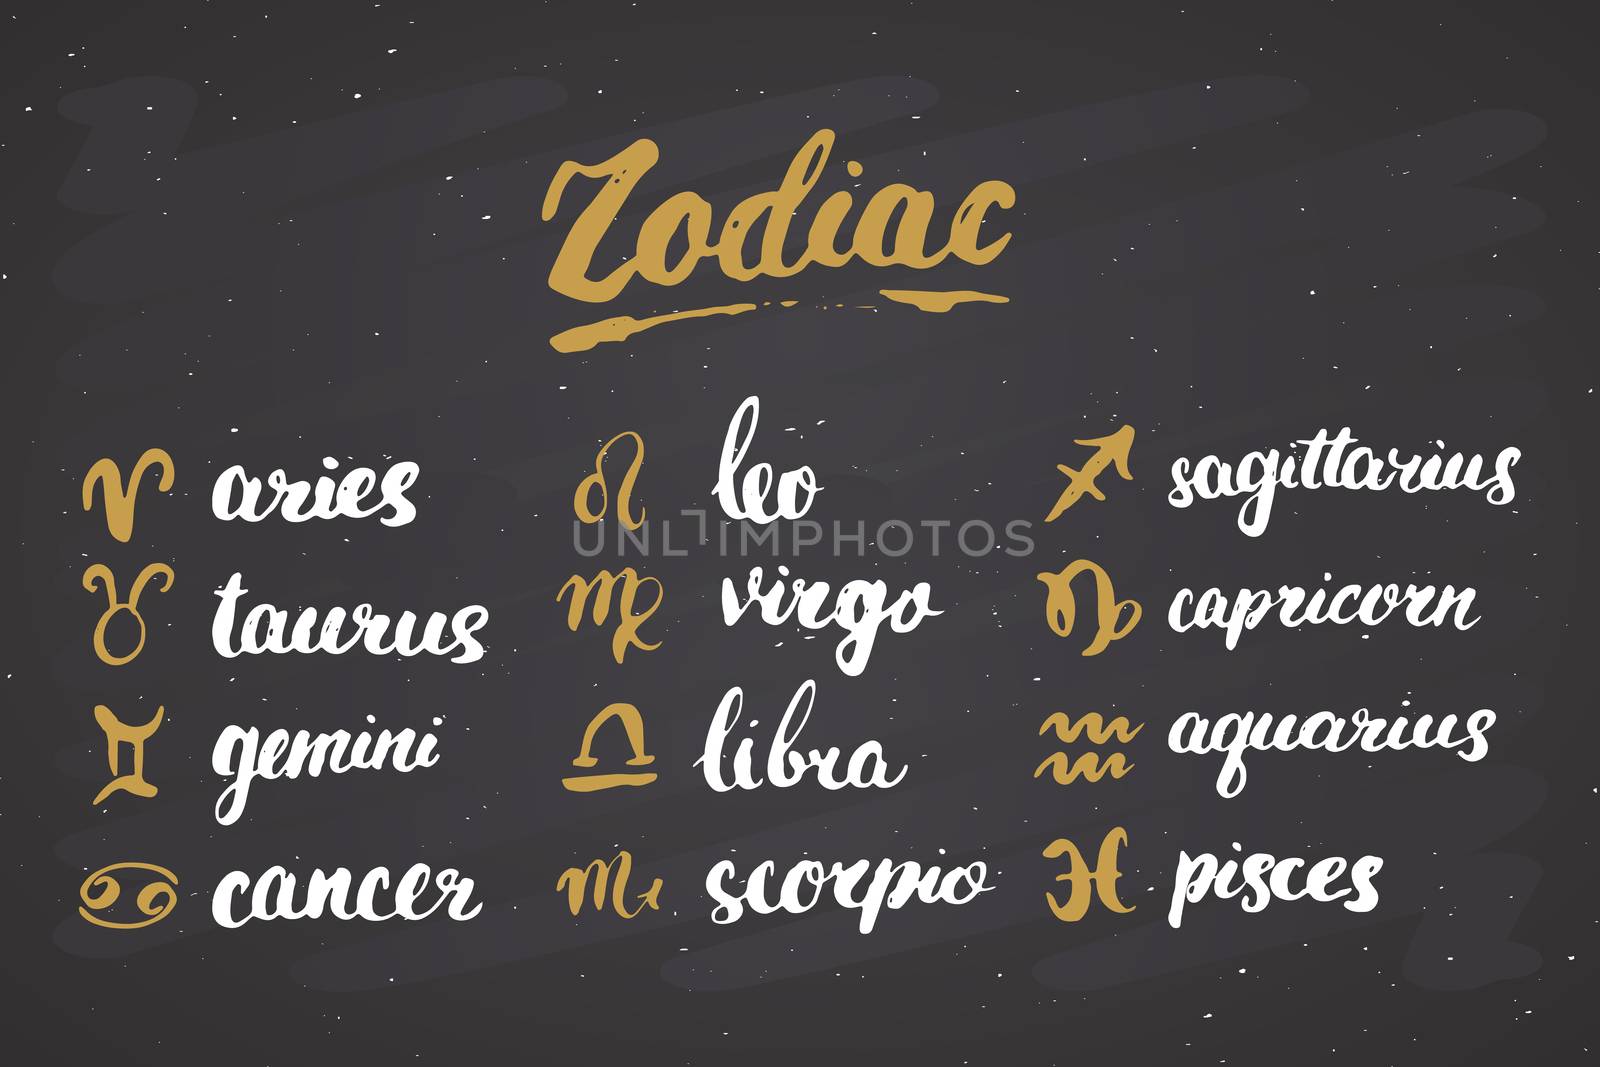 Zodiac signs set and letterings. Hand drawn horoscope astrology symbols, grunge textured design, typography print, vector illustration on chalkboard background by Lemon_workshop